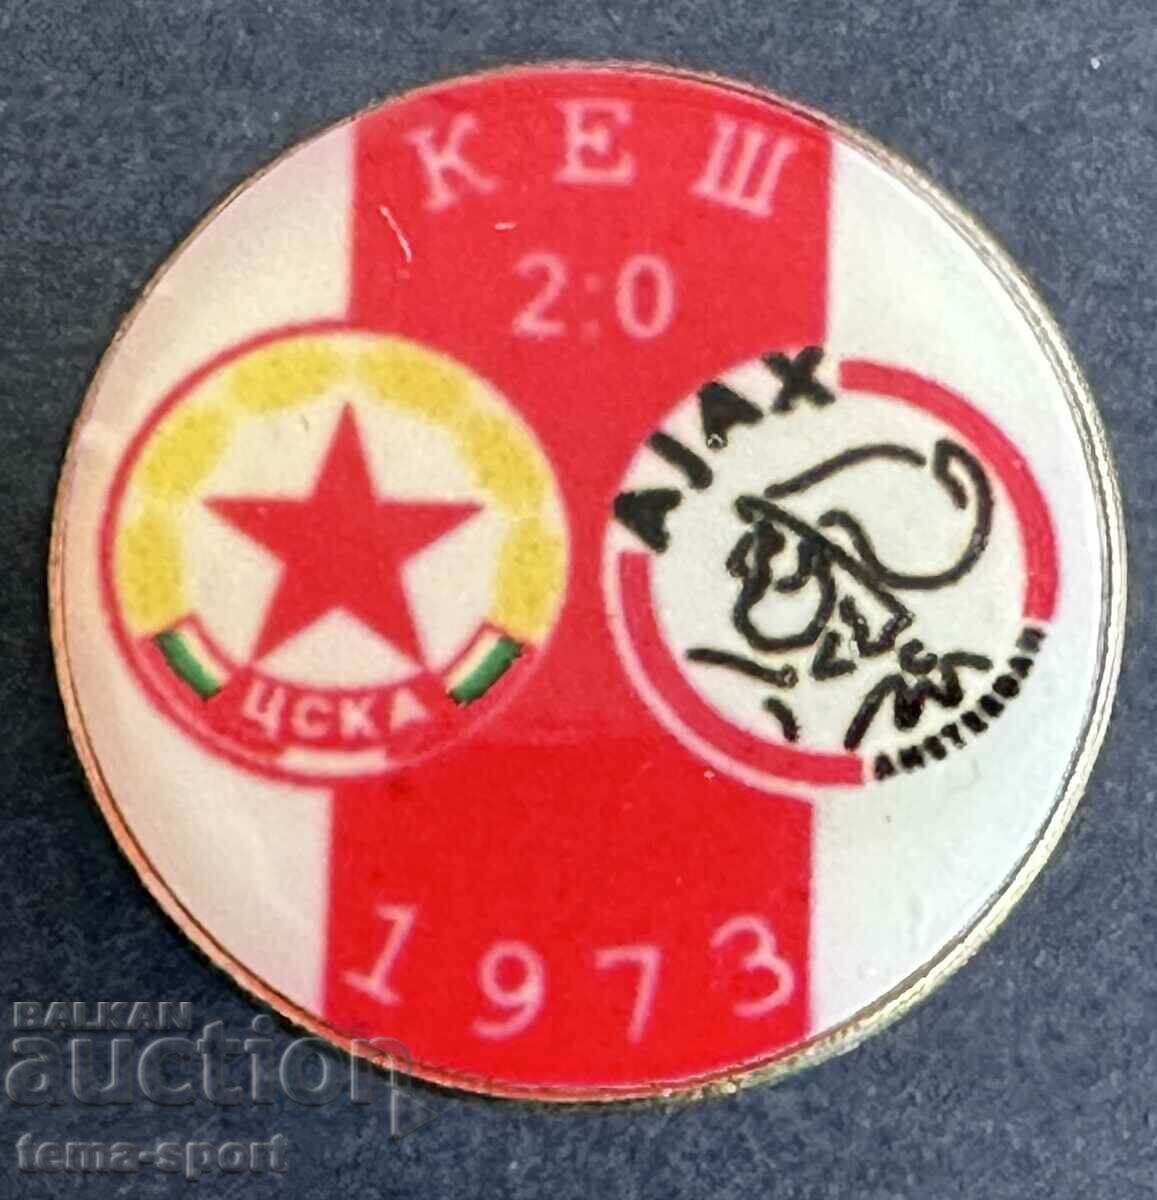 376 Bulgaria semnează clubul de fotbal CSKA Ajax 1973.